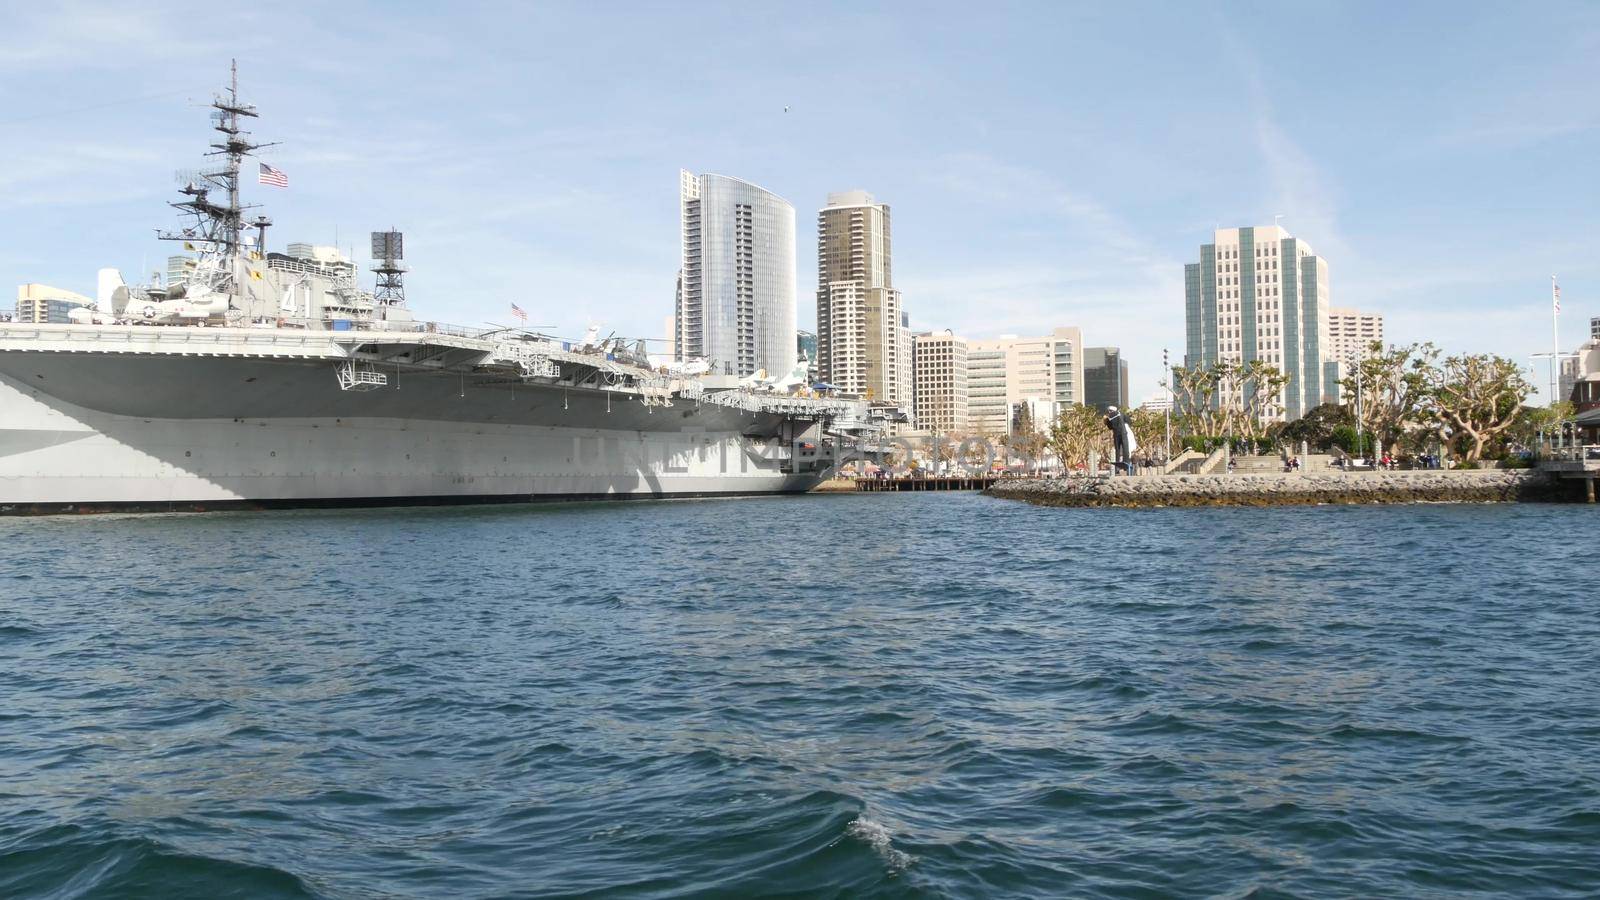 SAN DIEGO, CALIFORNIA USA - 30 JAN 2020: USS Midway military aircraft carrier, historic war ship. Naval army battleship. Maritime warship, legend of navy fleet near Unconditional Surrender Statue.